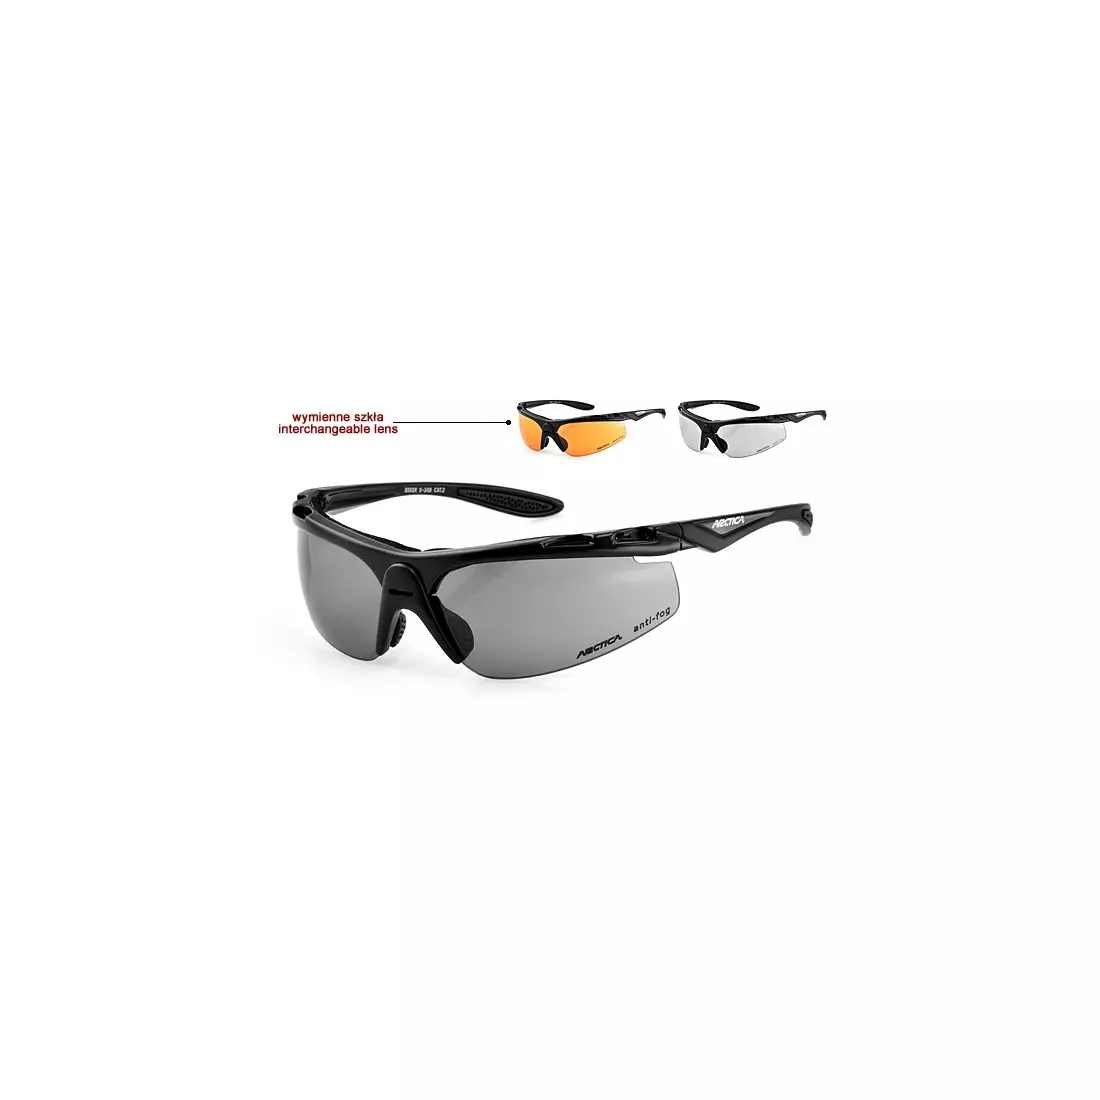 ARCTICA sports glasses S-30 B - color: Black